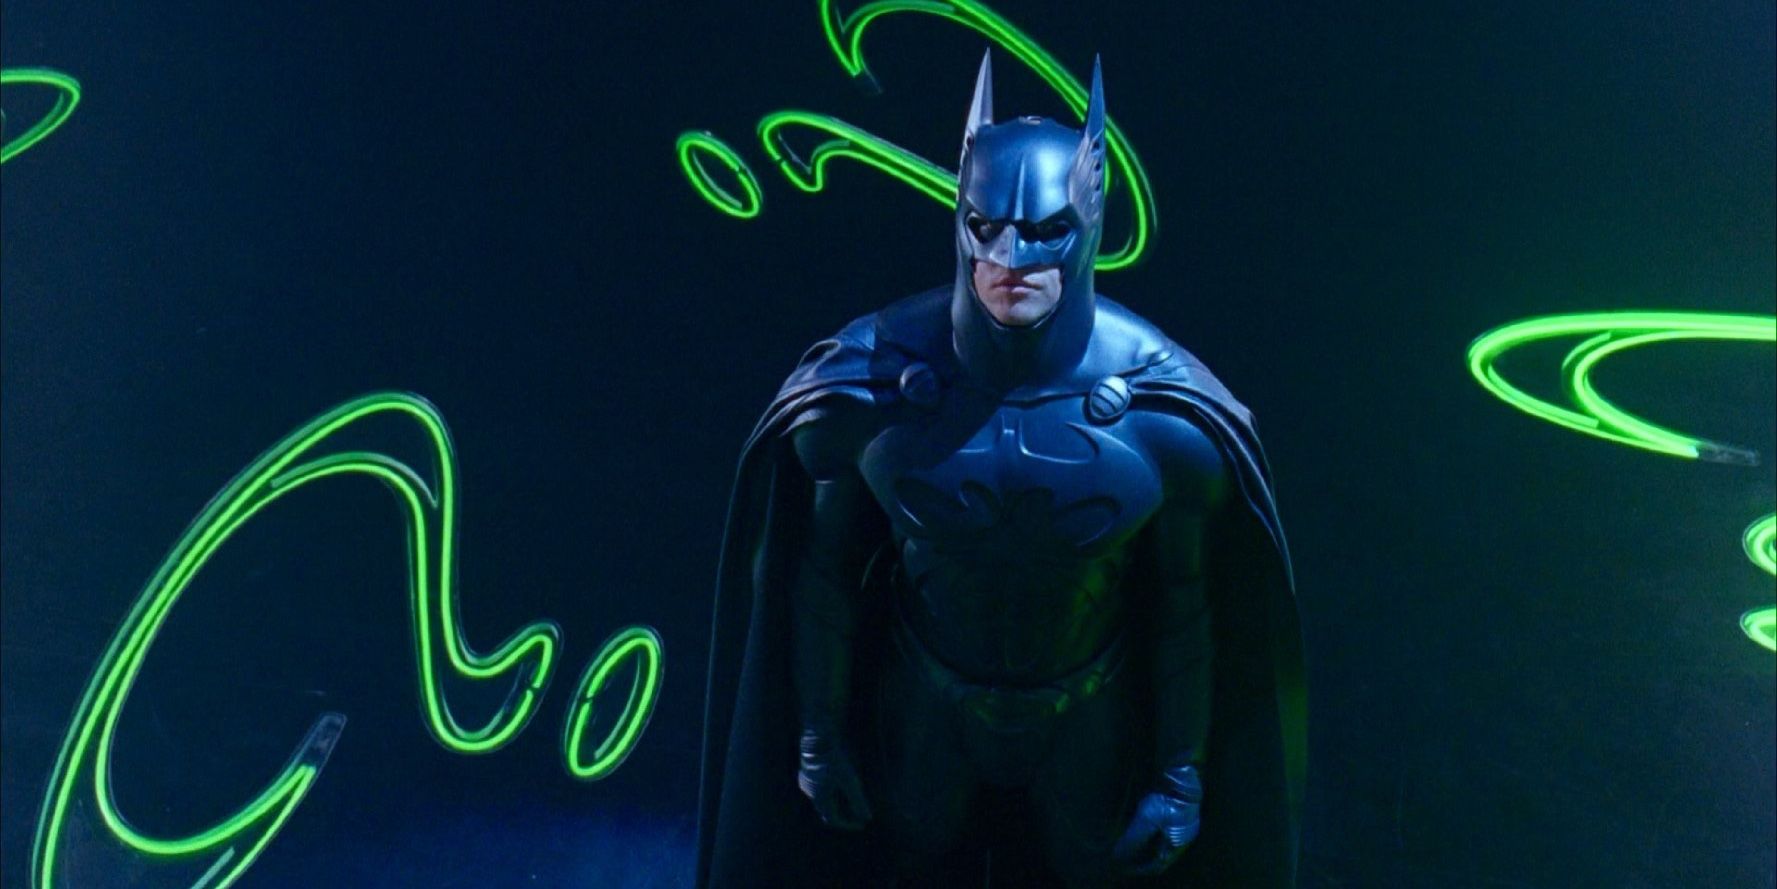 Val Kilmer as Batman, Batman Forever